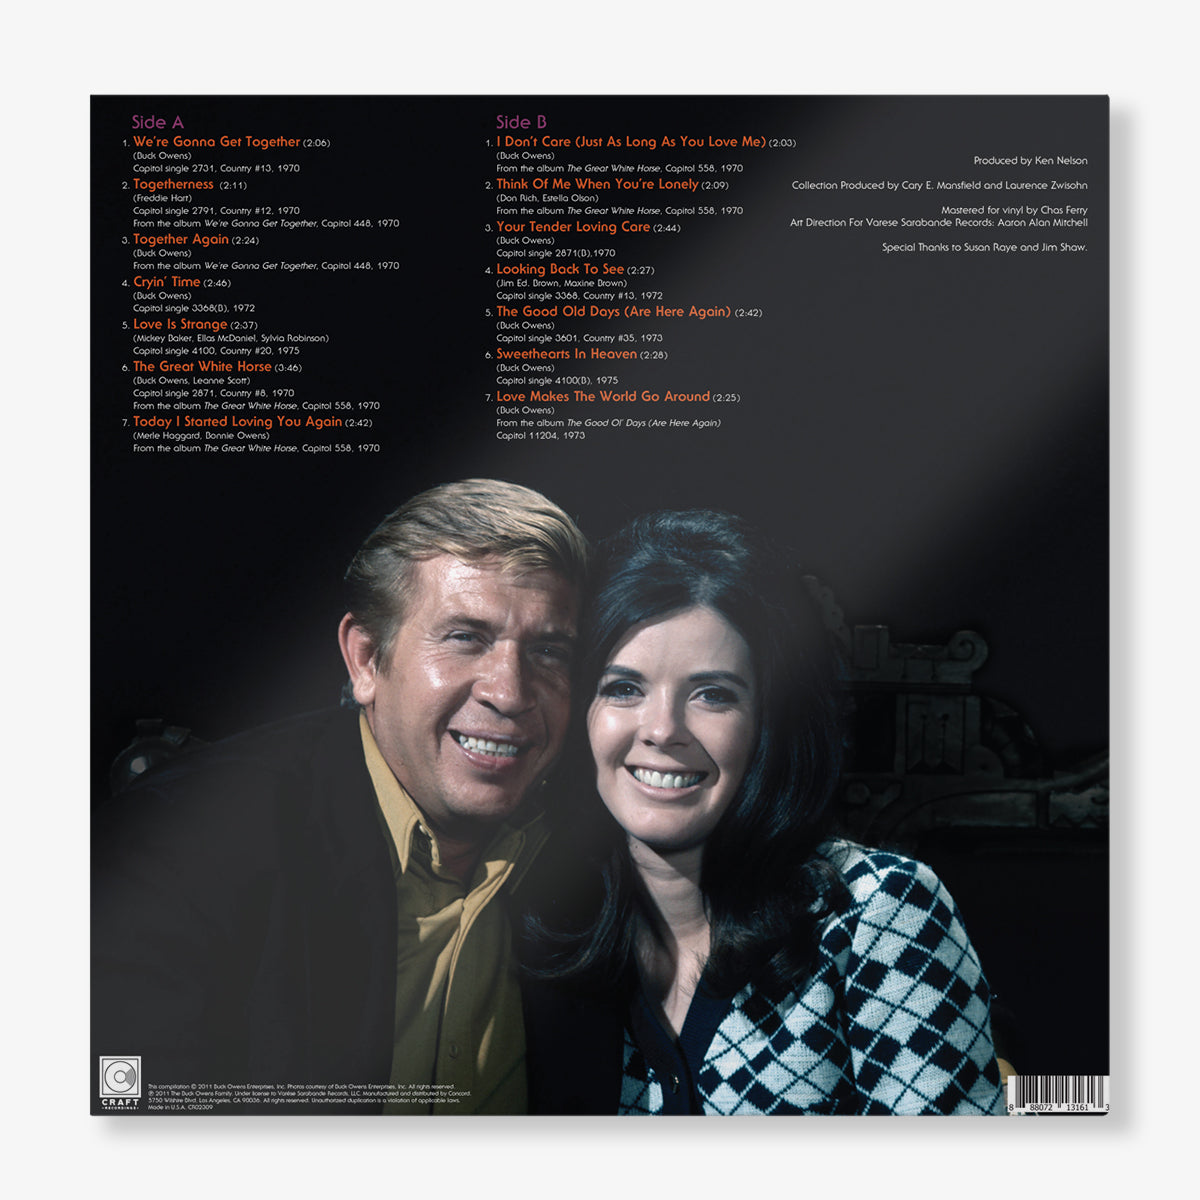 The Very Best of Buck Owens &amp; Susan Raye (LP)